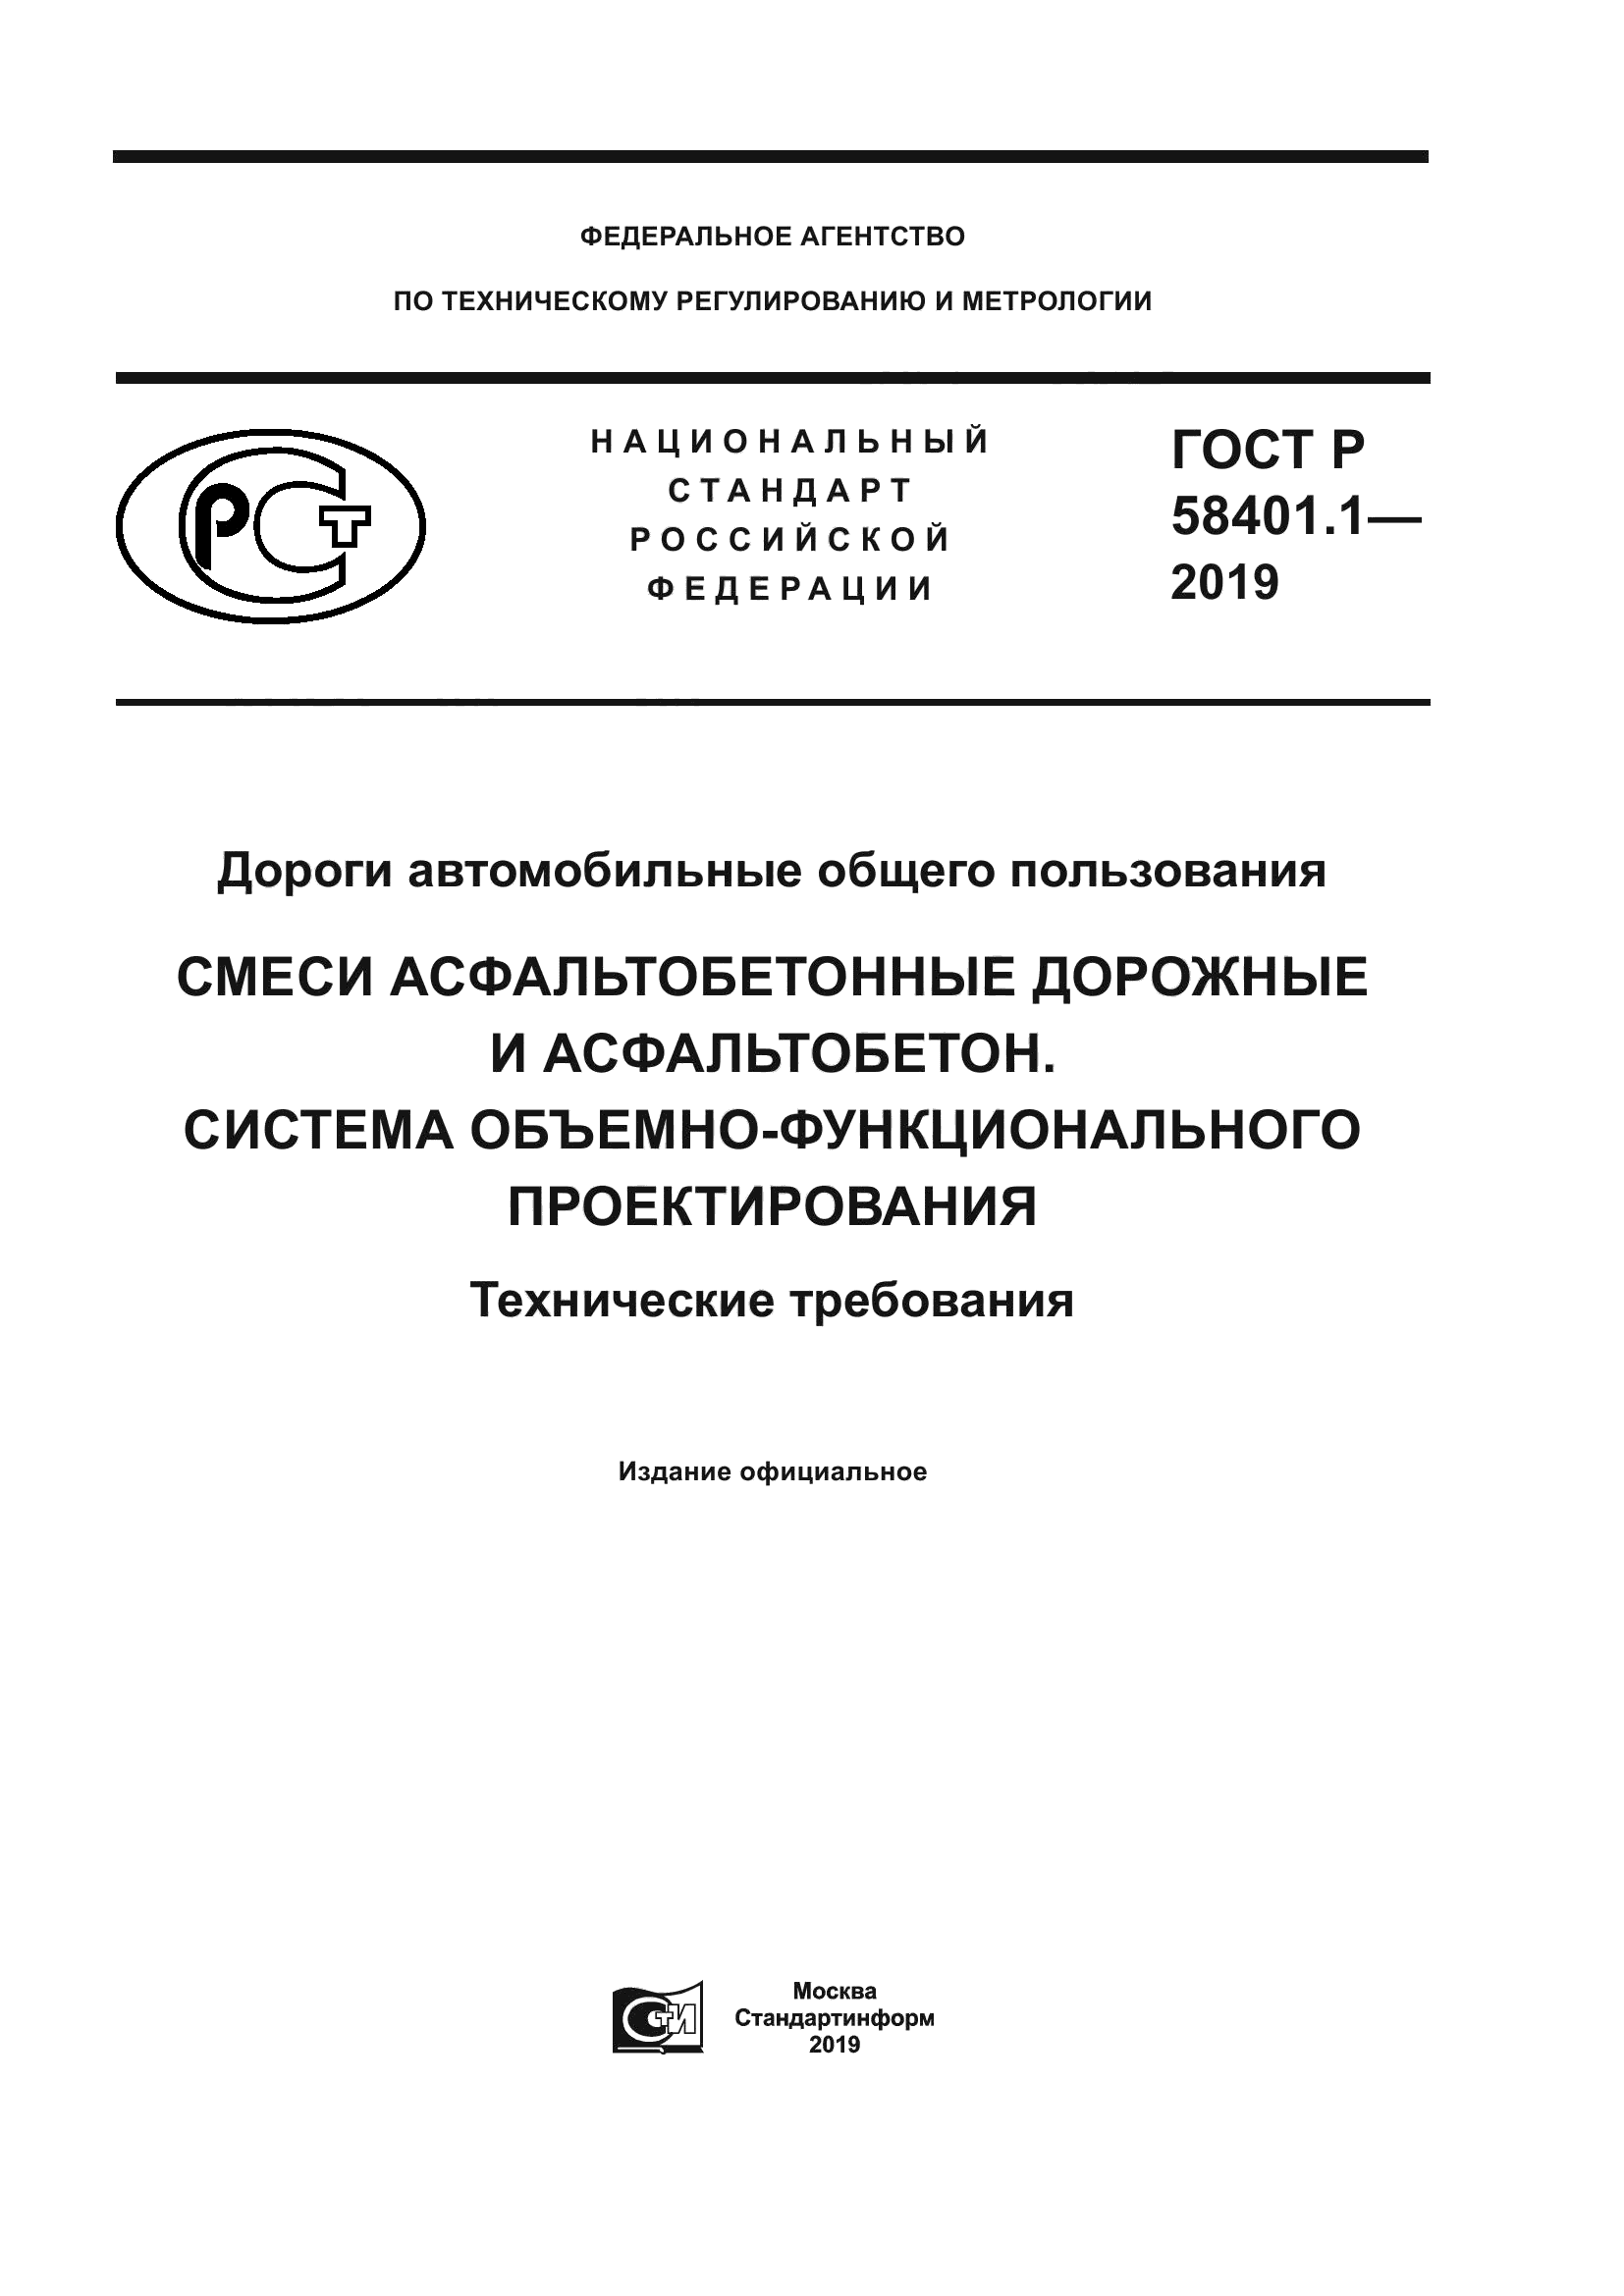 ГОСТ Р 58401.1-2019